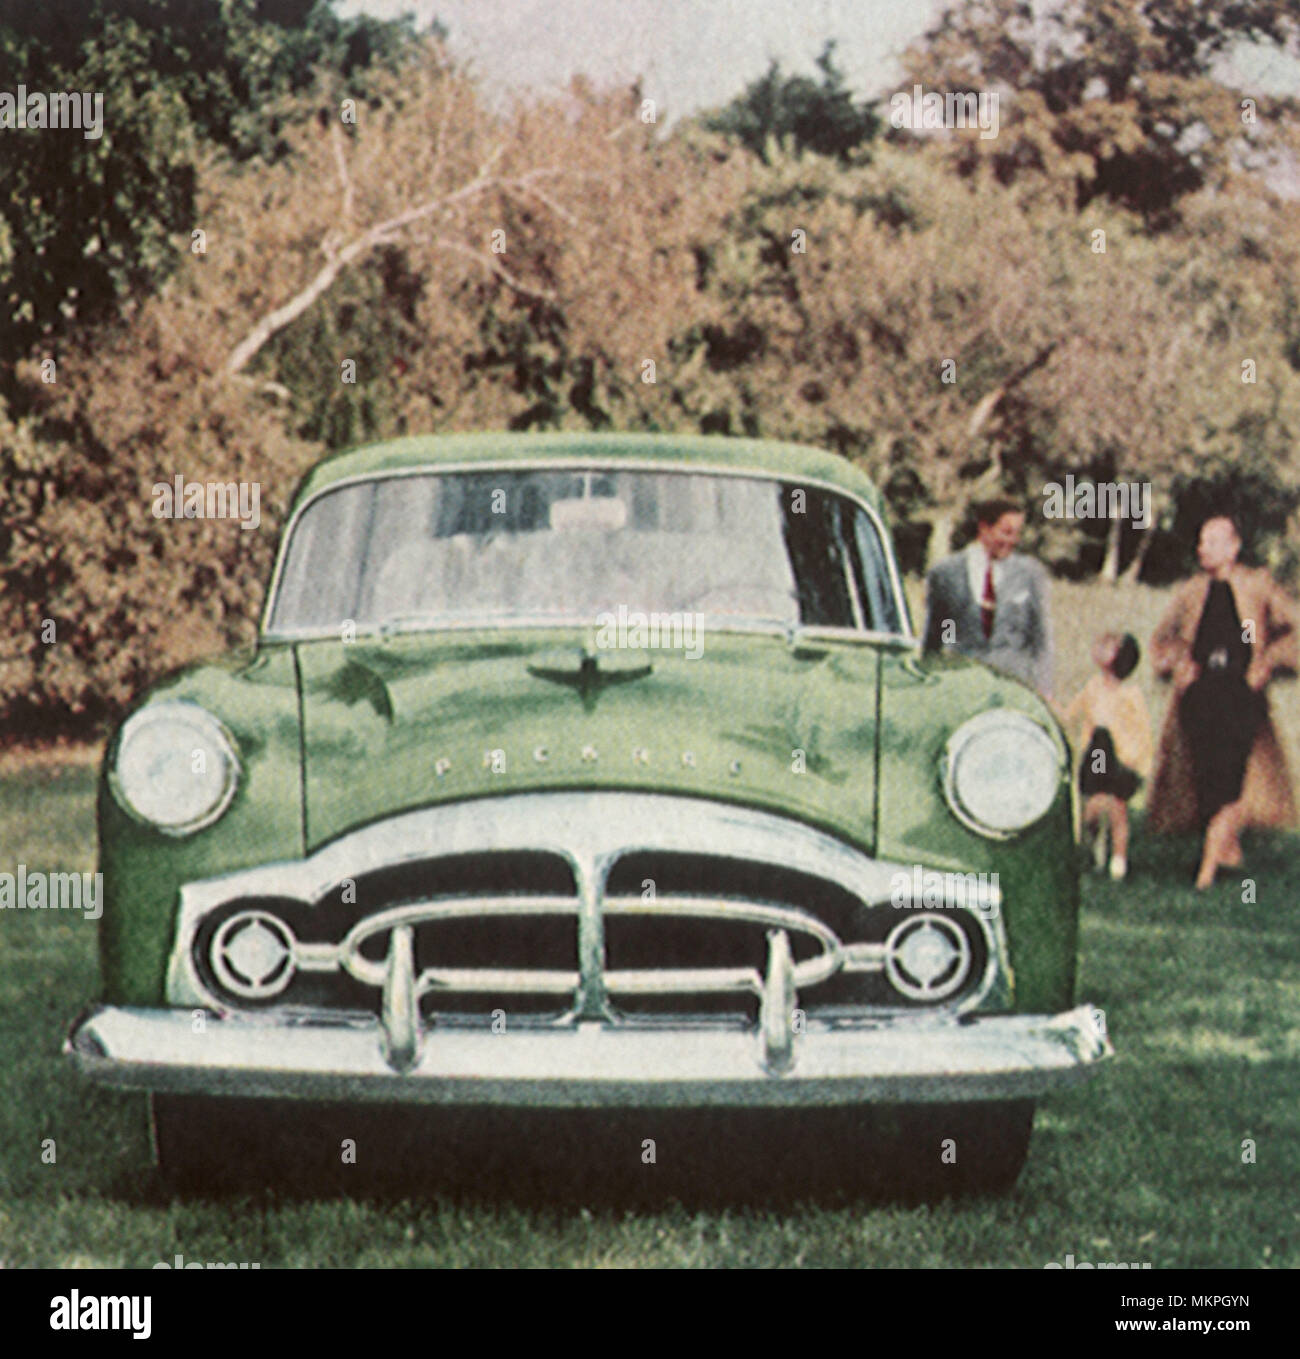 1952-Packard Stockfoto